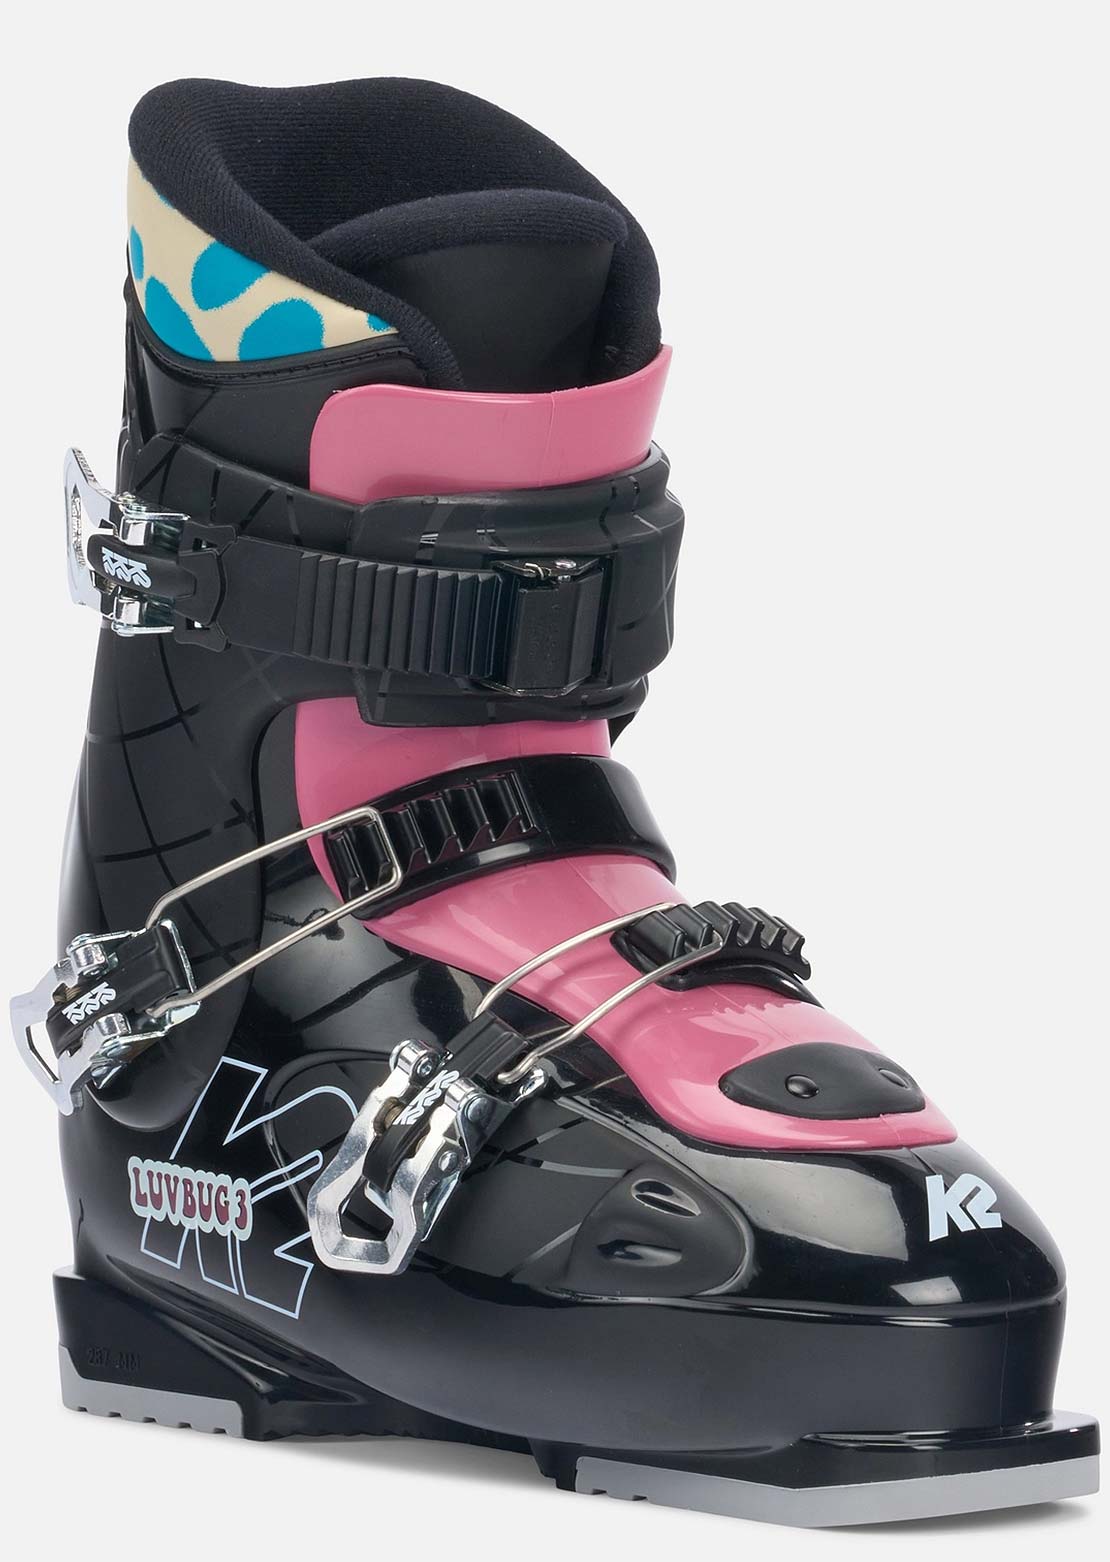 K2 Junior Luv Bug 3 Ski Boots